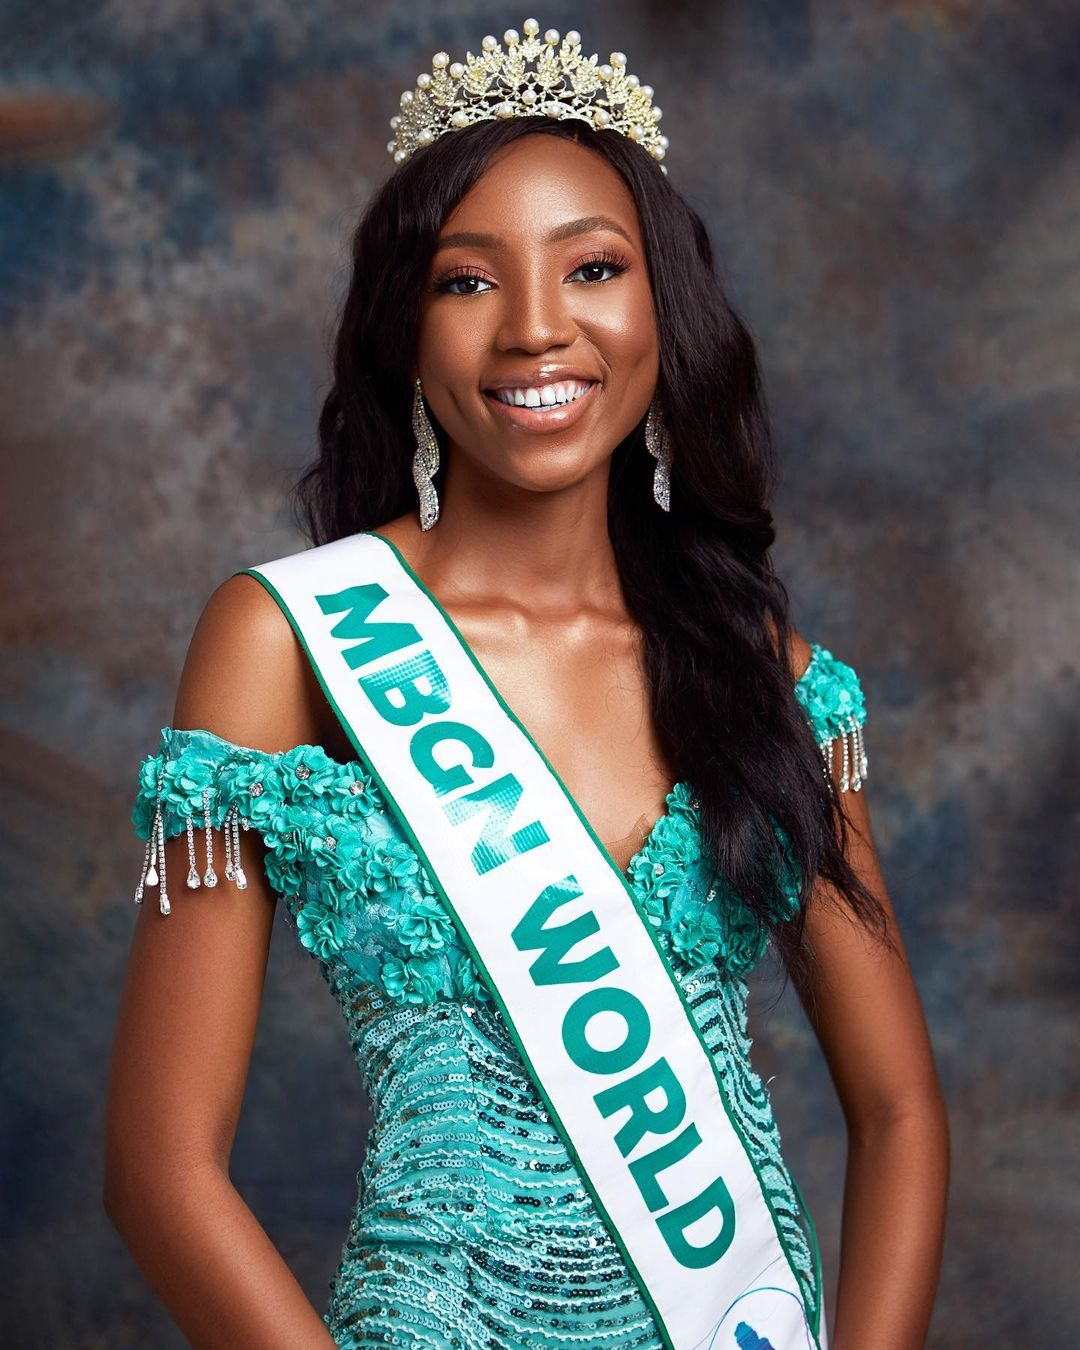 MBGN 2018: Miss Imo, Anita Ukah emerges winner - Daily Post Nigeria